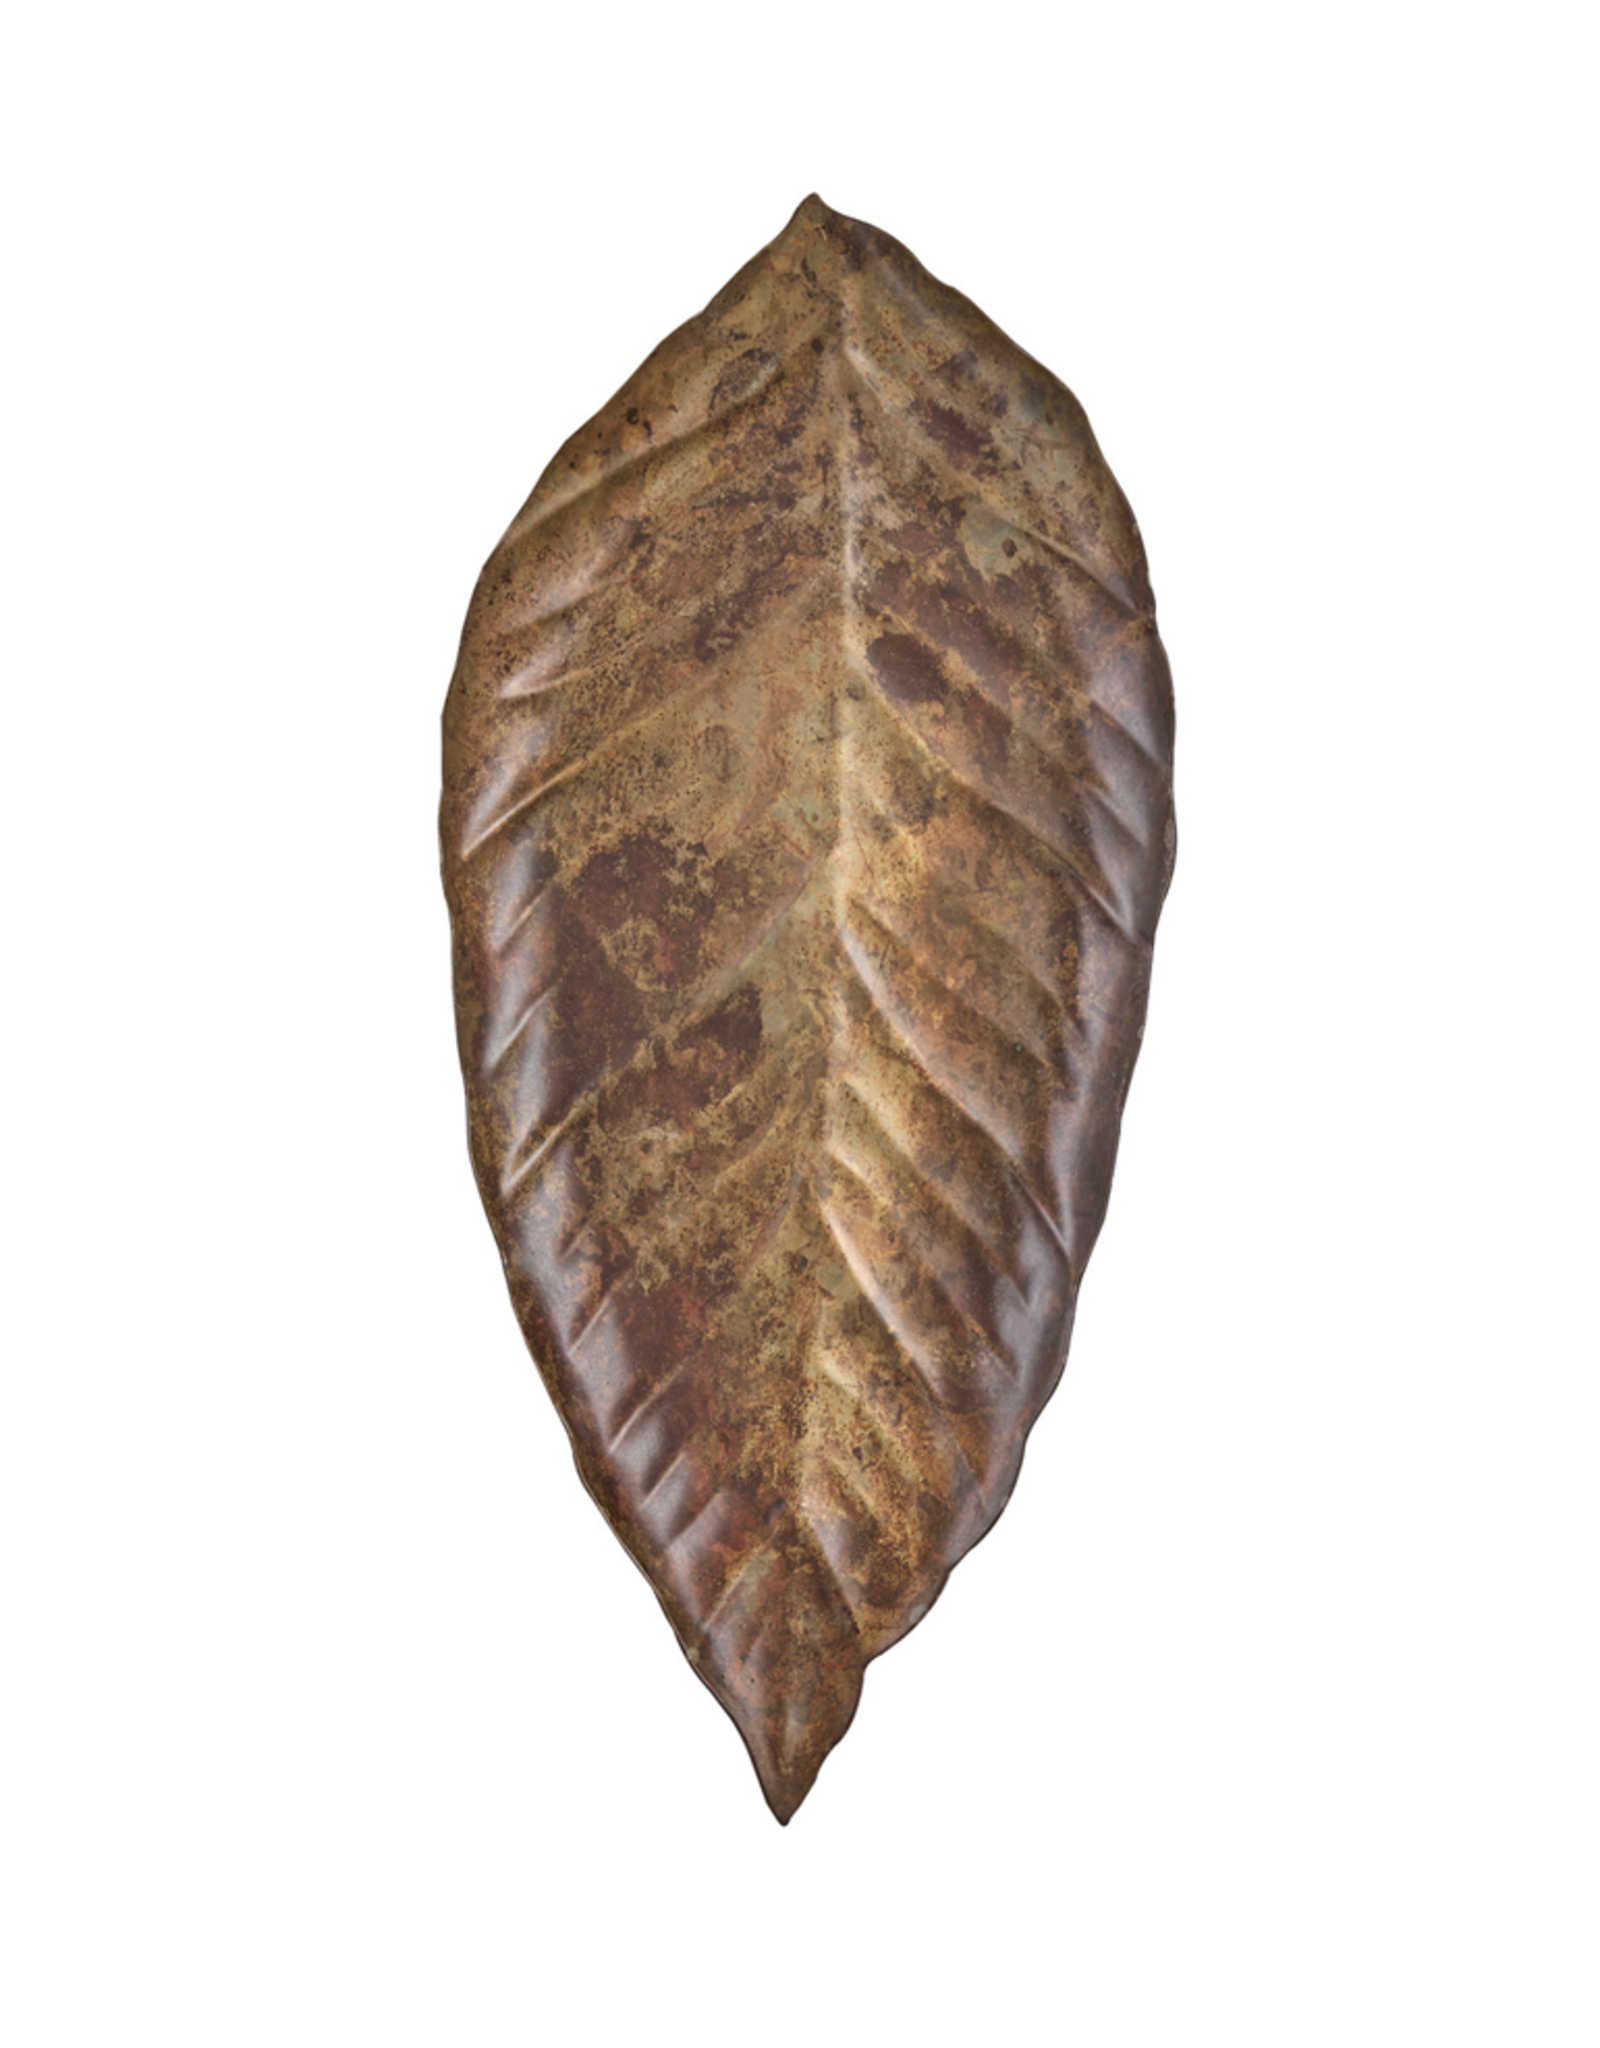 Park Designs Distressed Copper Leaf Tray